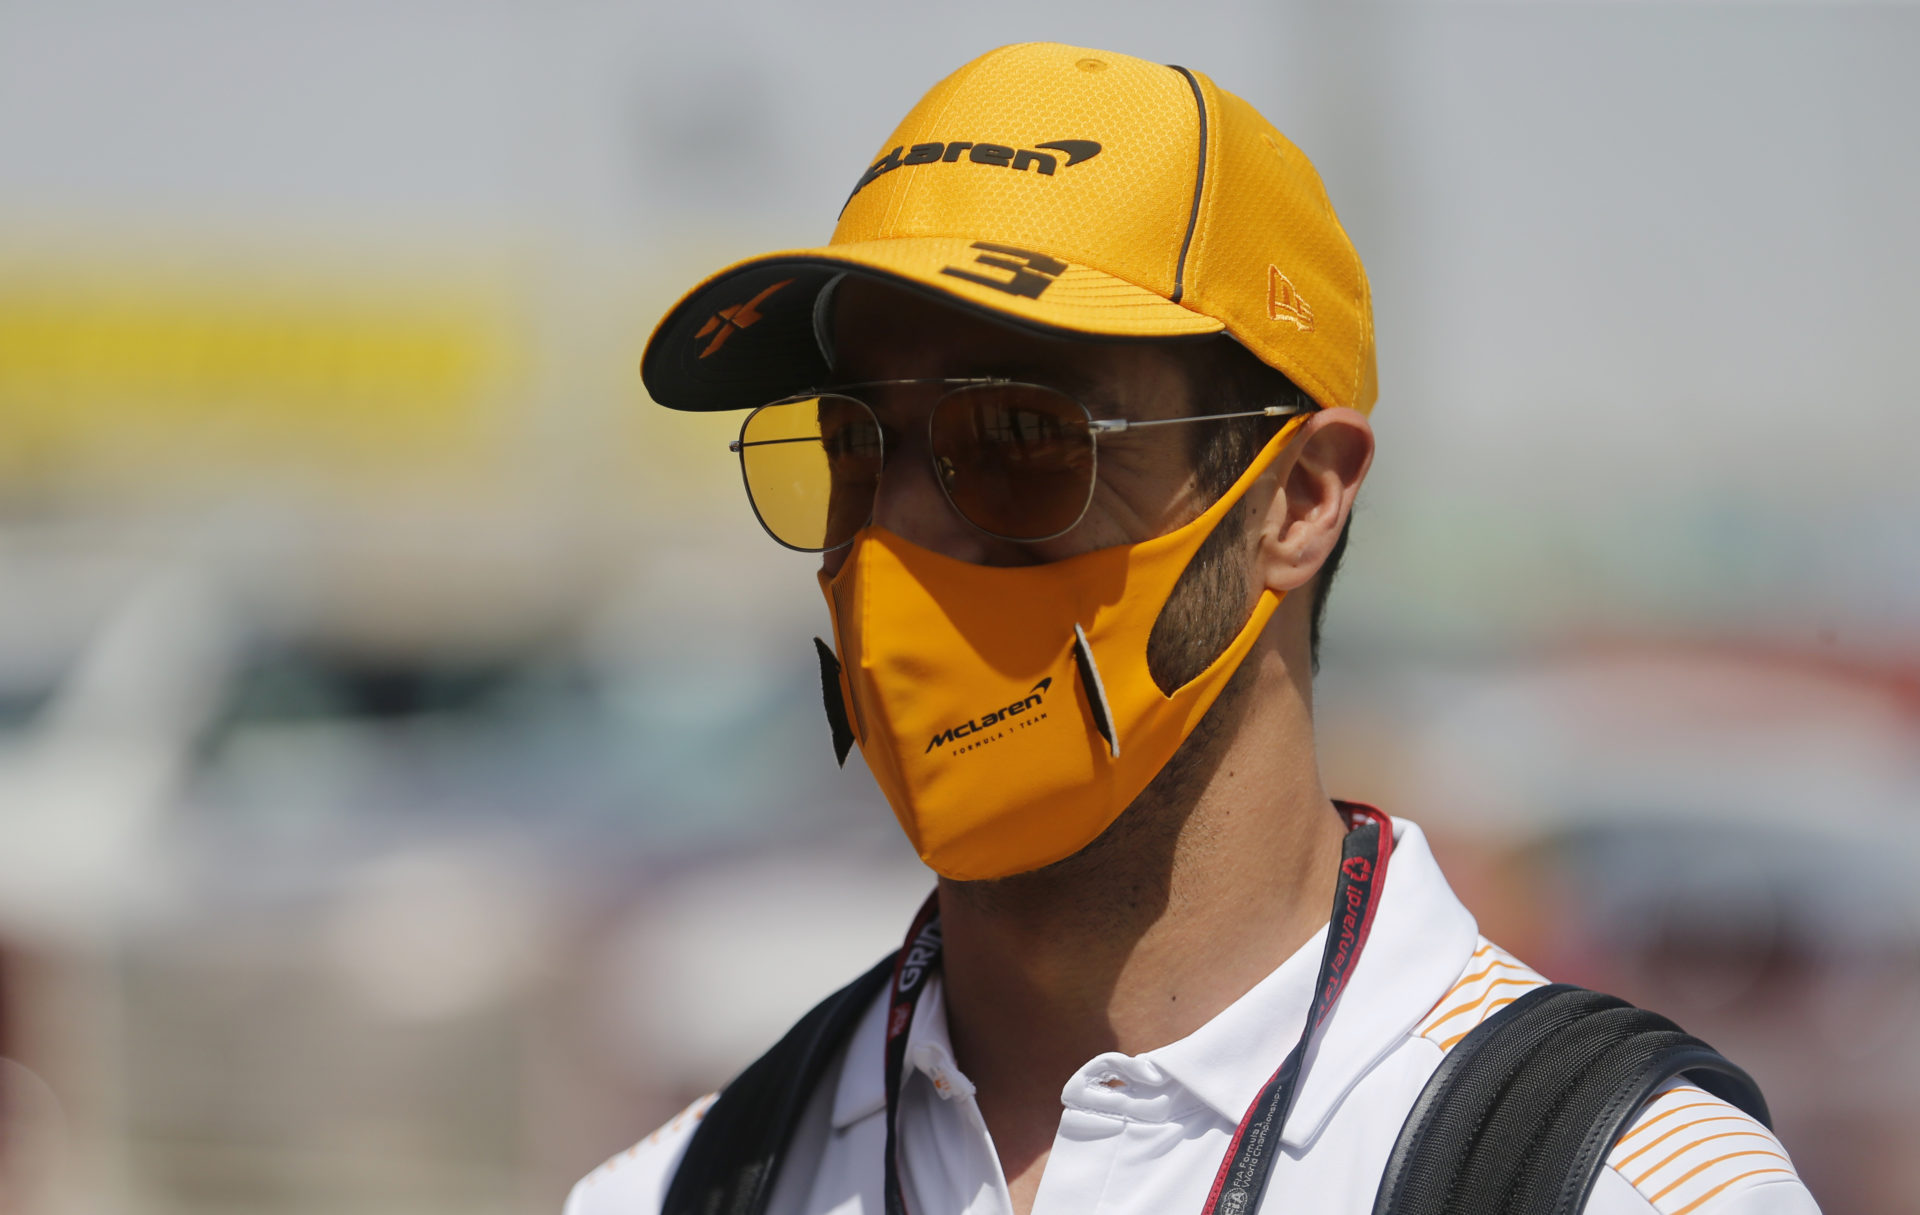 Reasons behind Ricciardos move to Mclaren explained 1